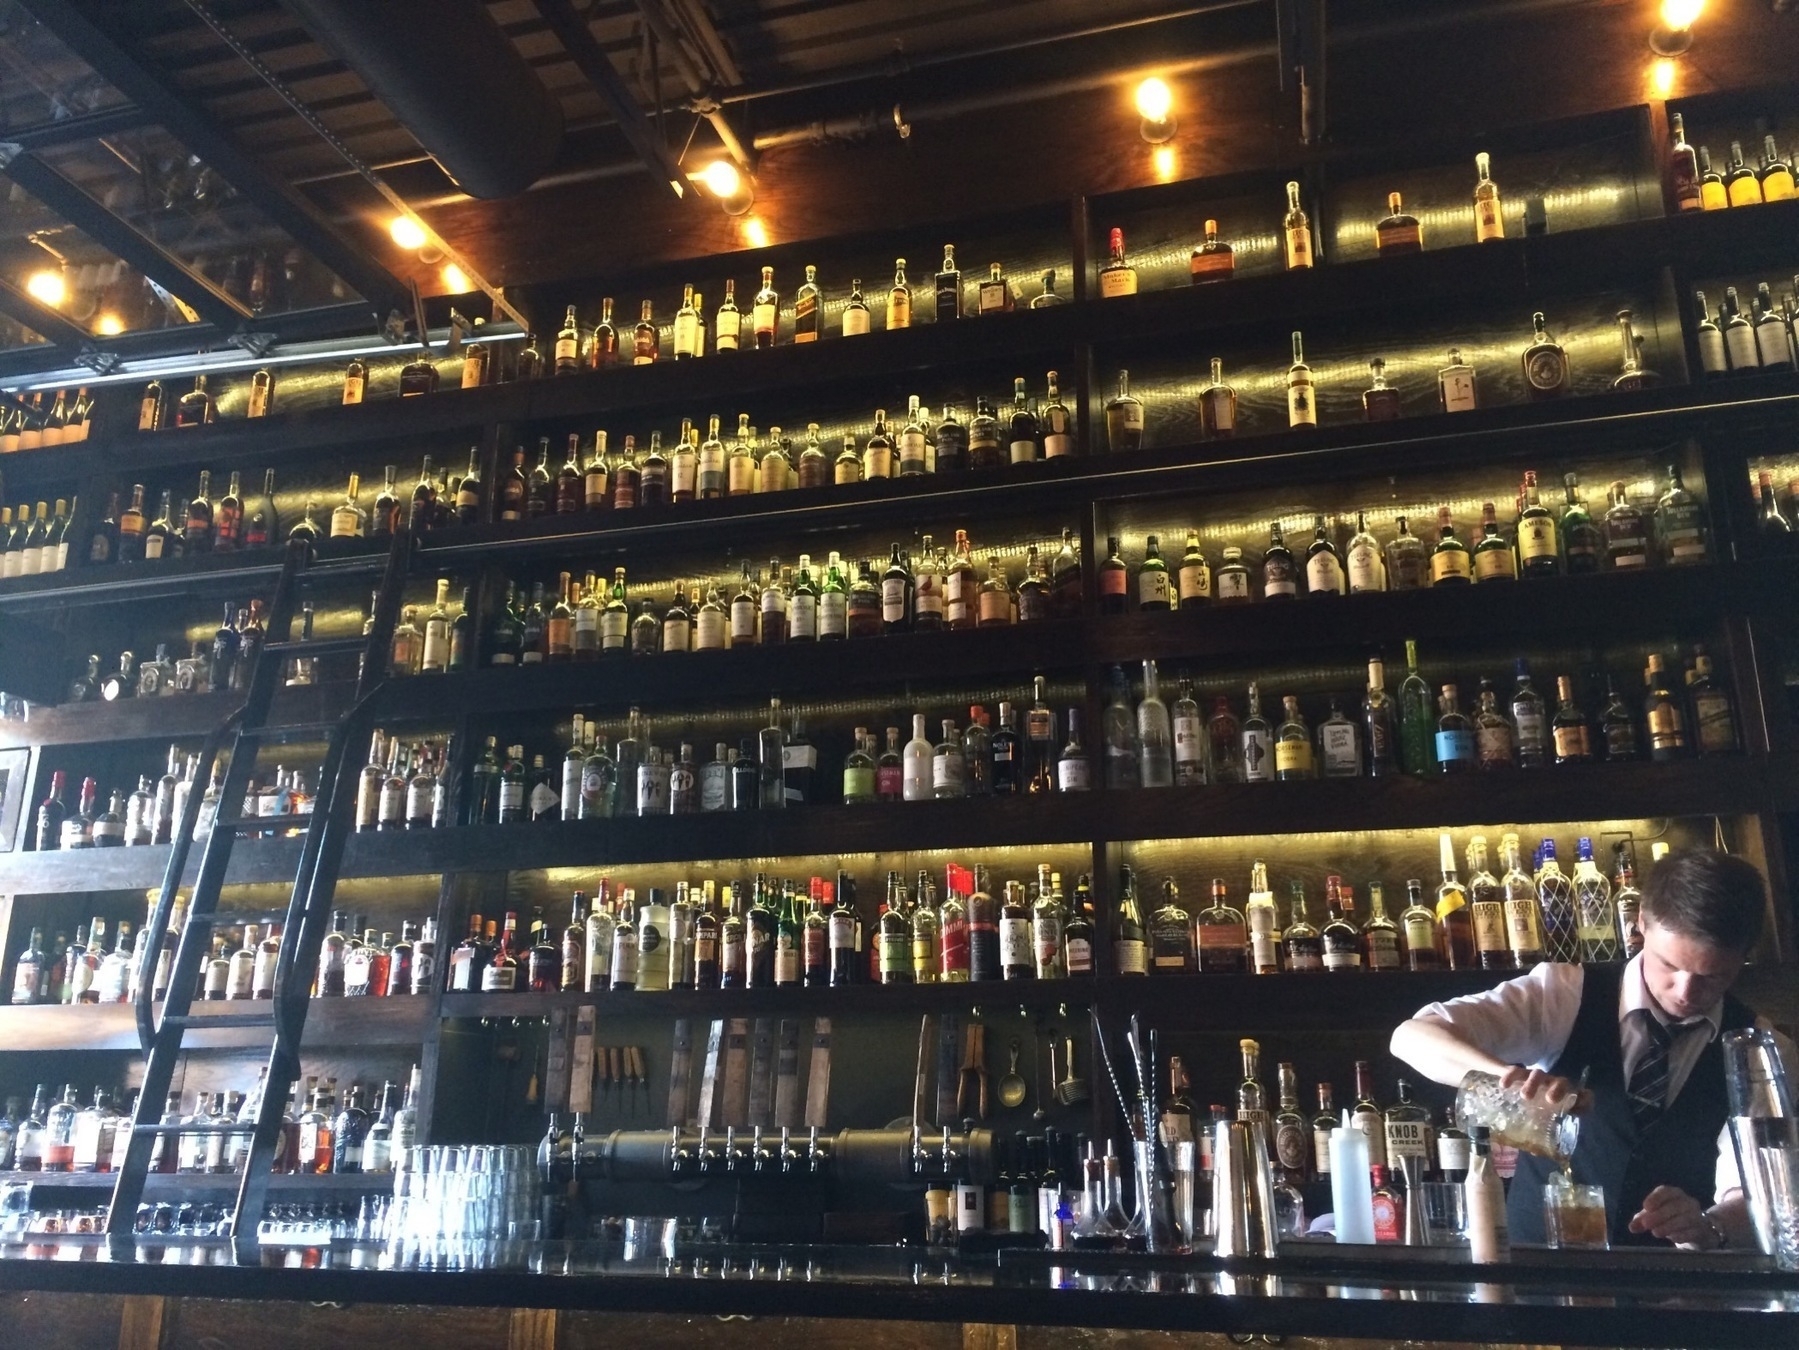 A wall of liquor bottles behind a bartender mixing a drink